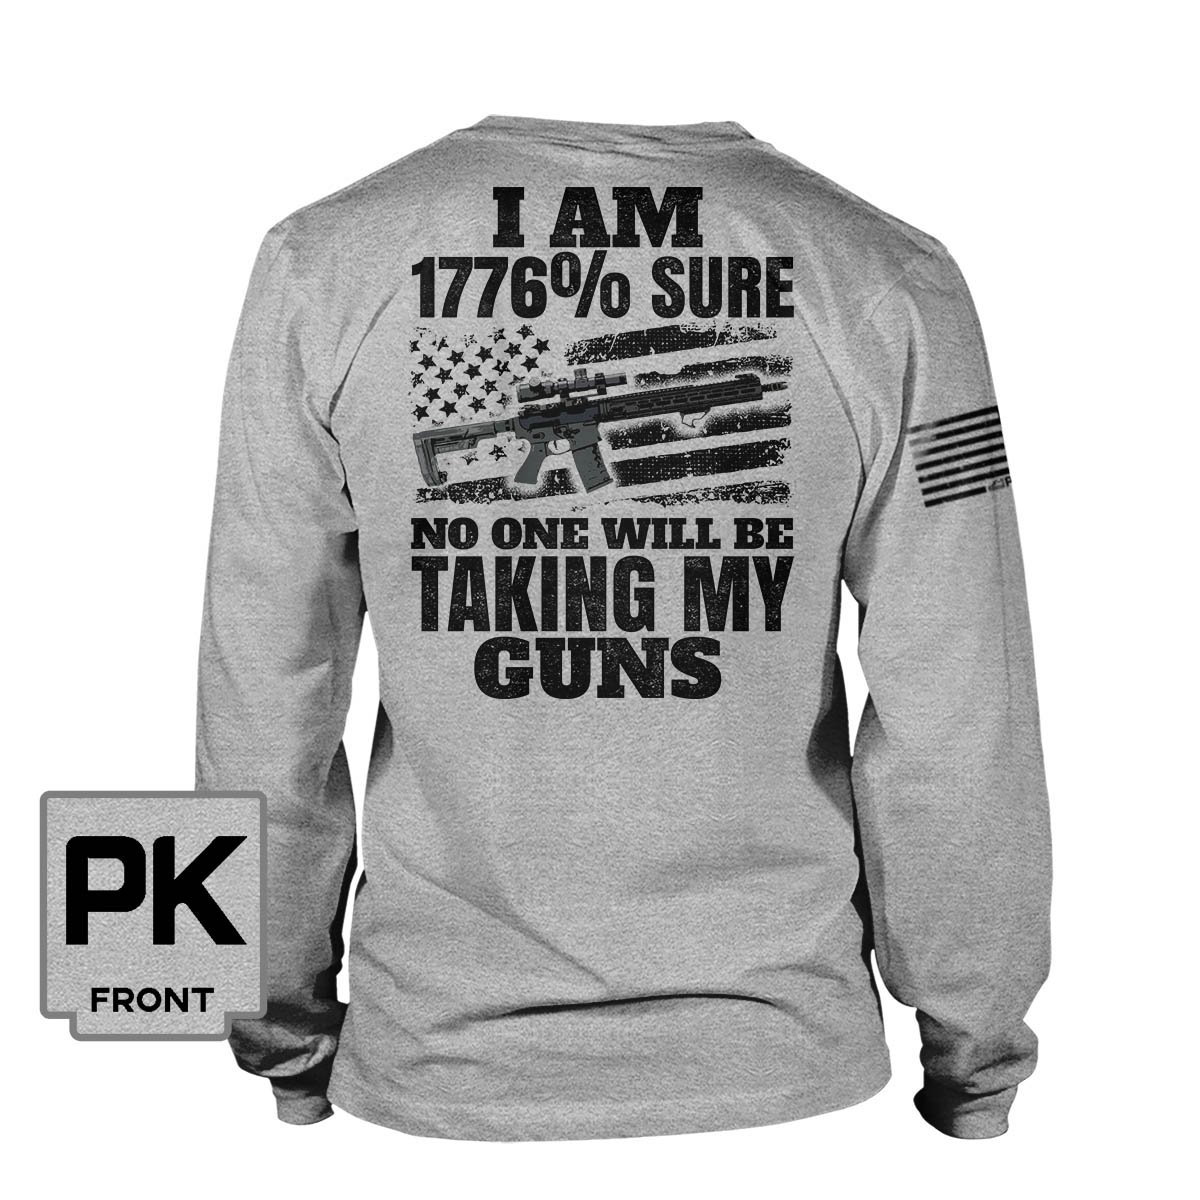 I am 1776 sure no one will be taking my guns Shirt3